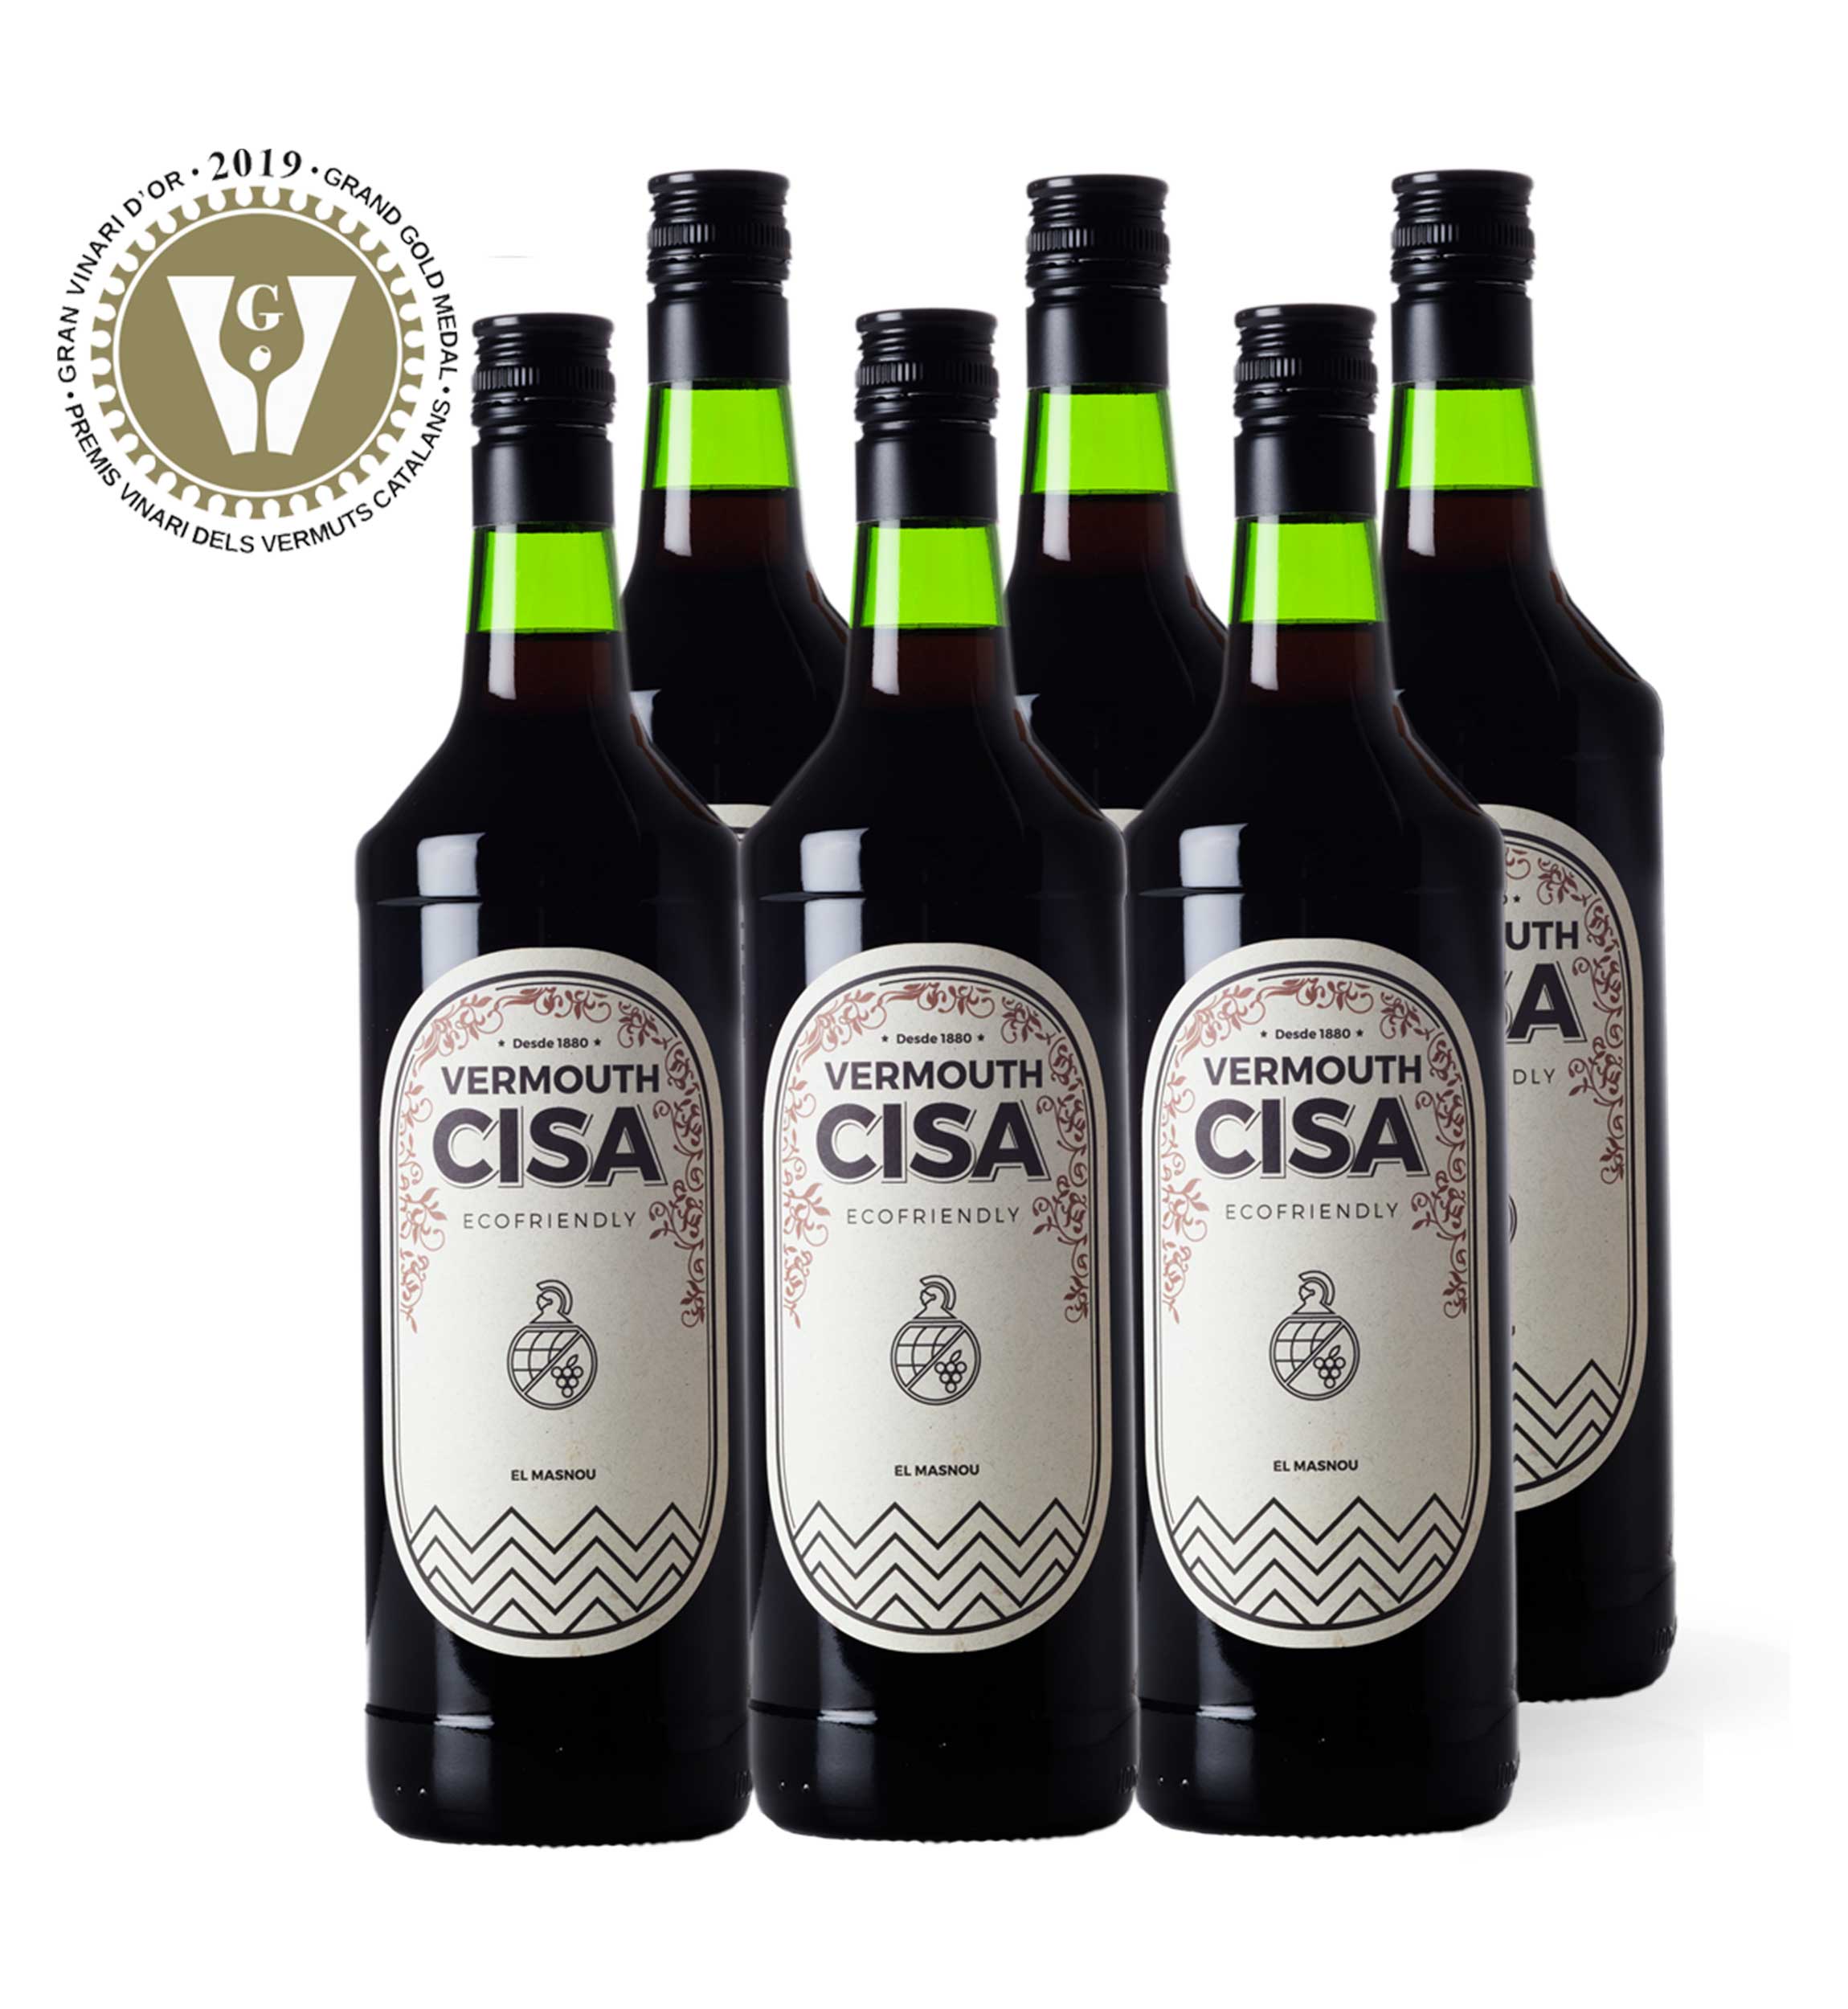 Pack de 6 botellas de Vermouth Cisa ECOfriendly